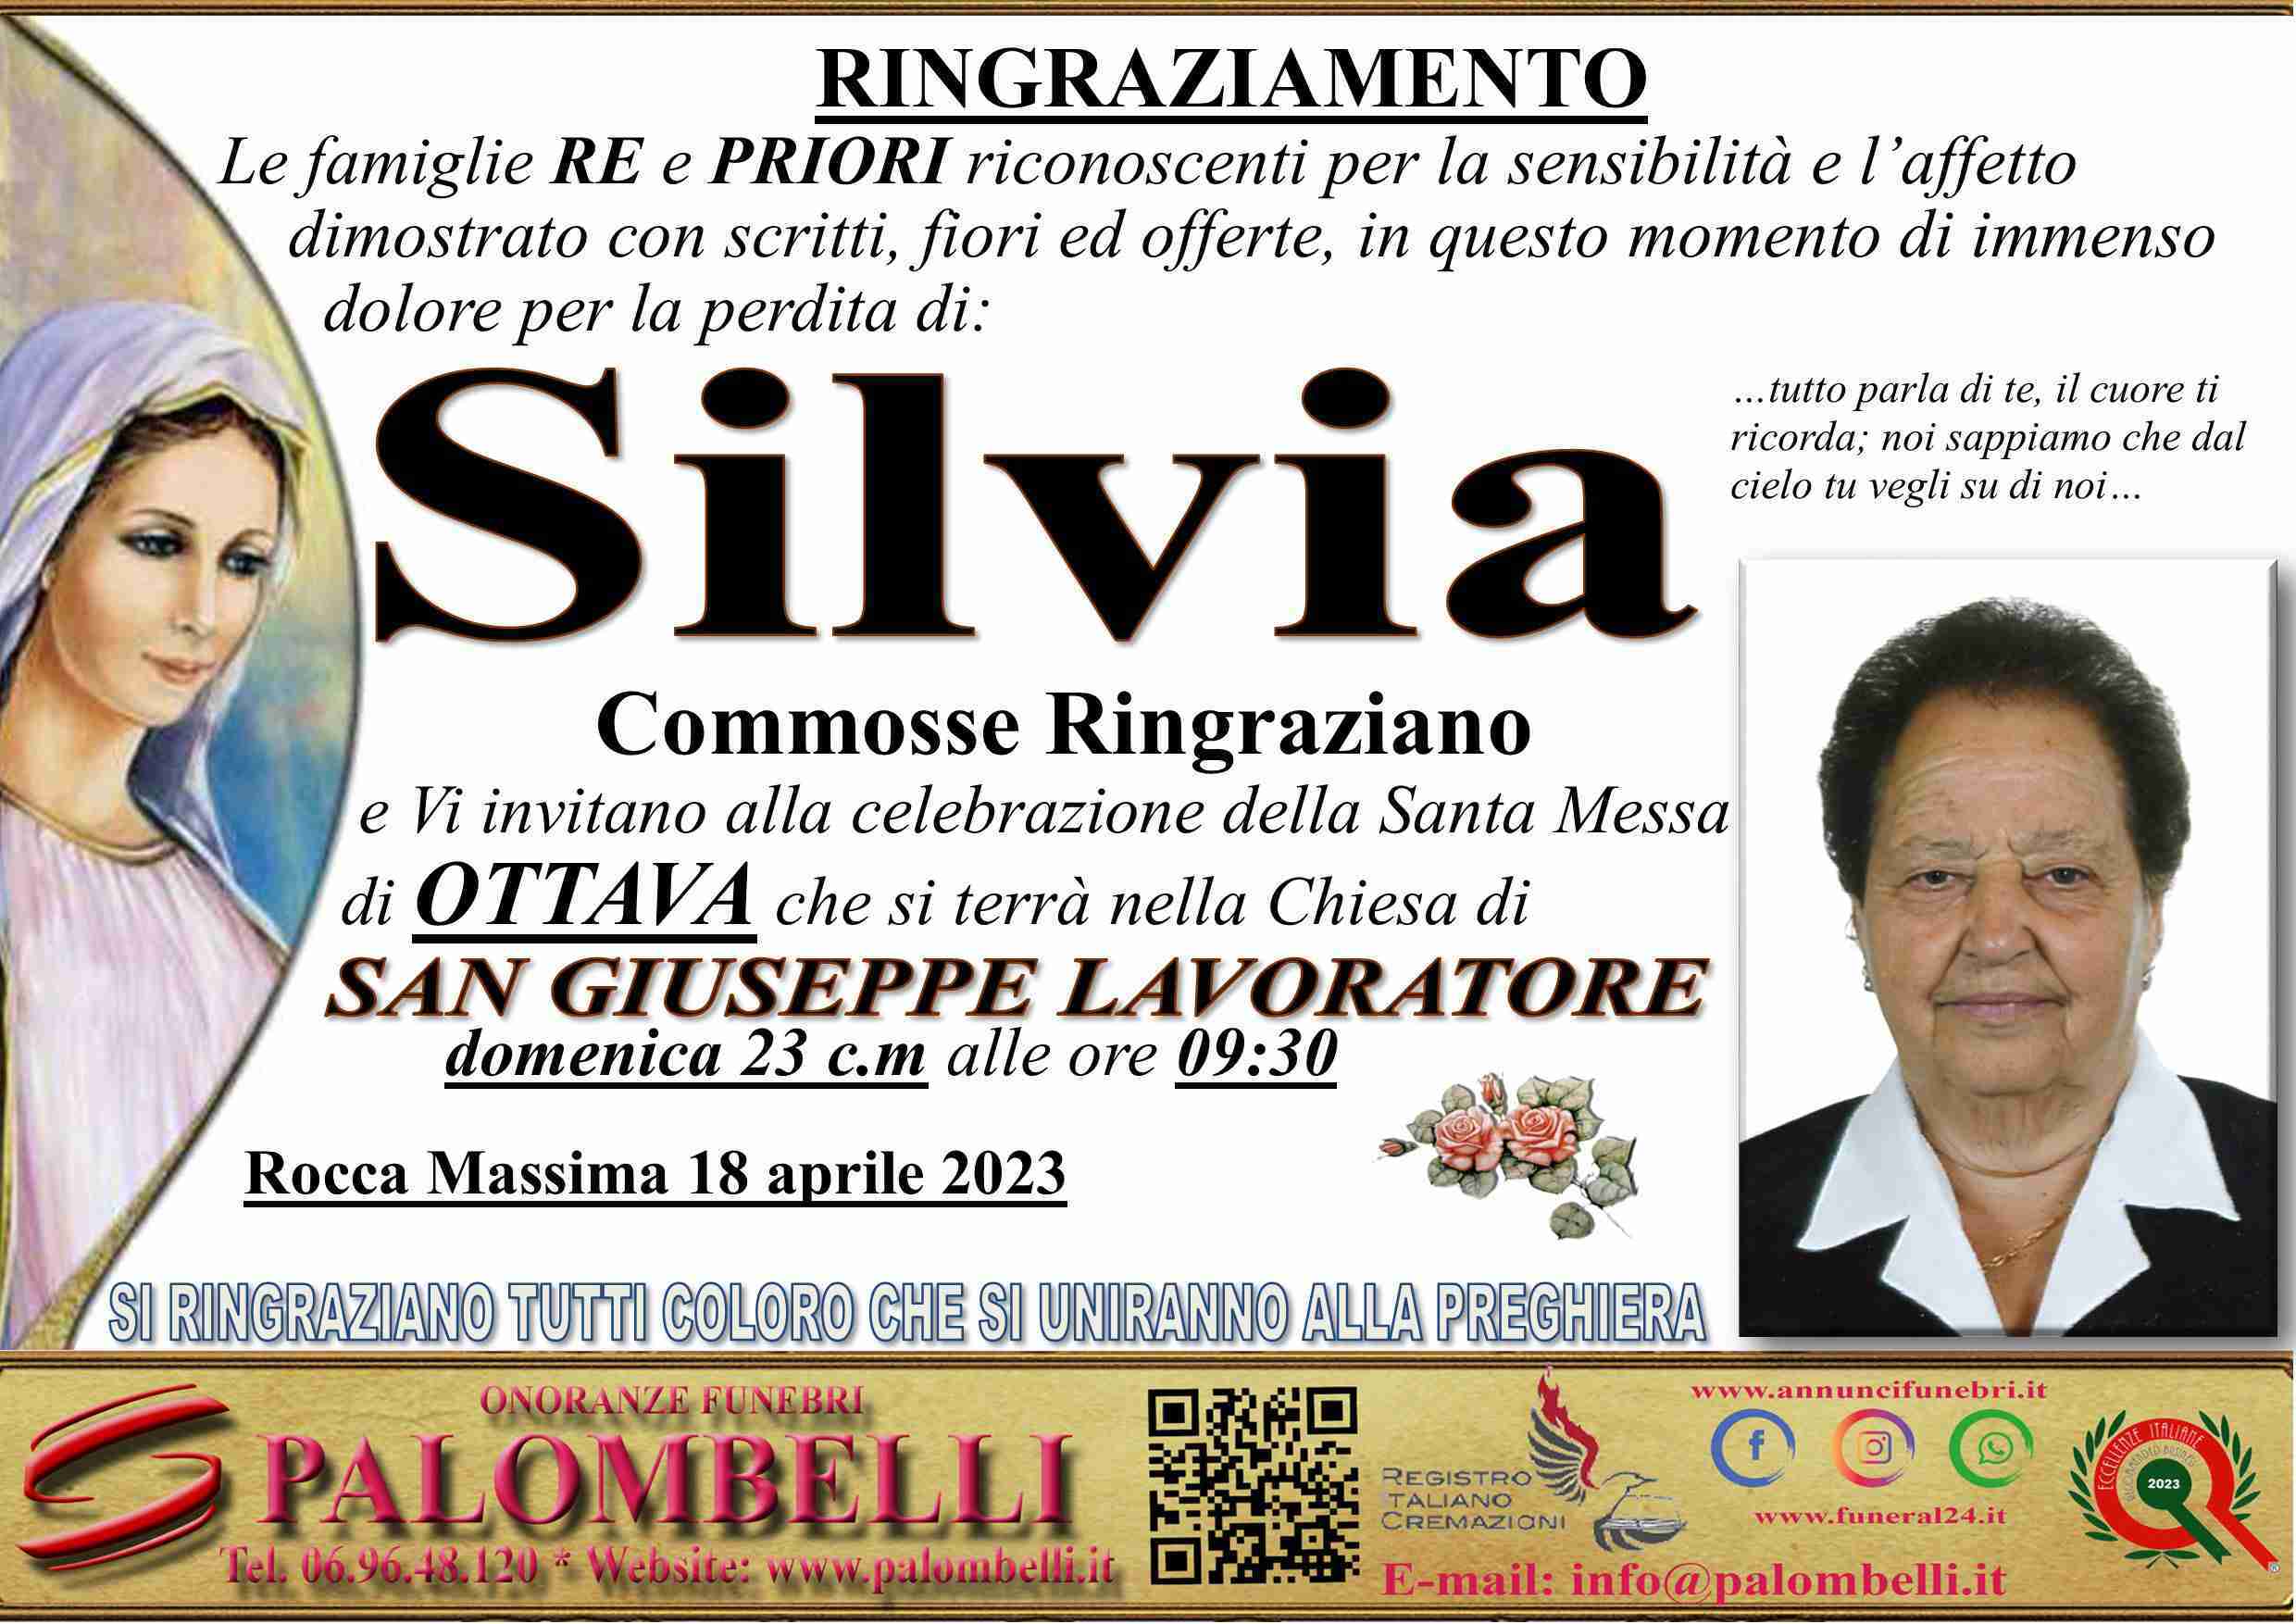 Silvia Re